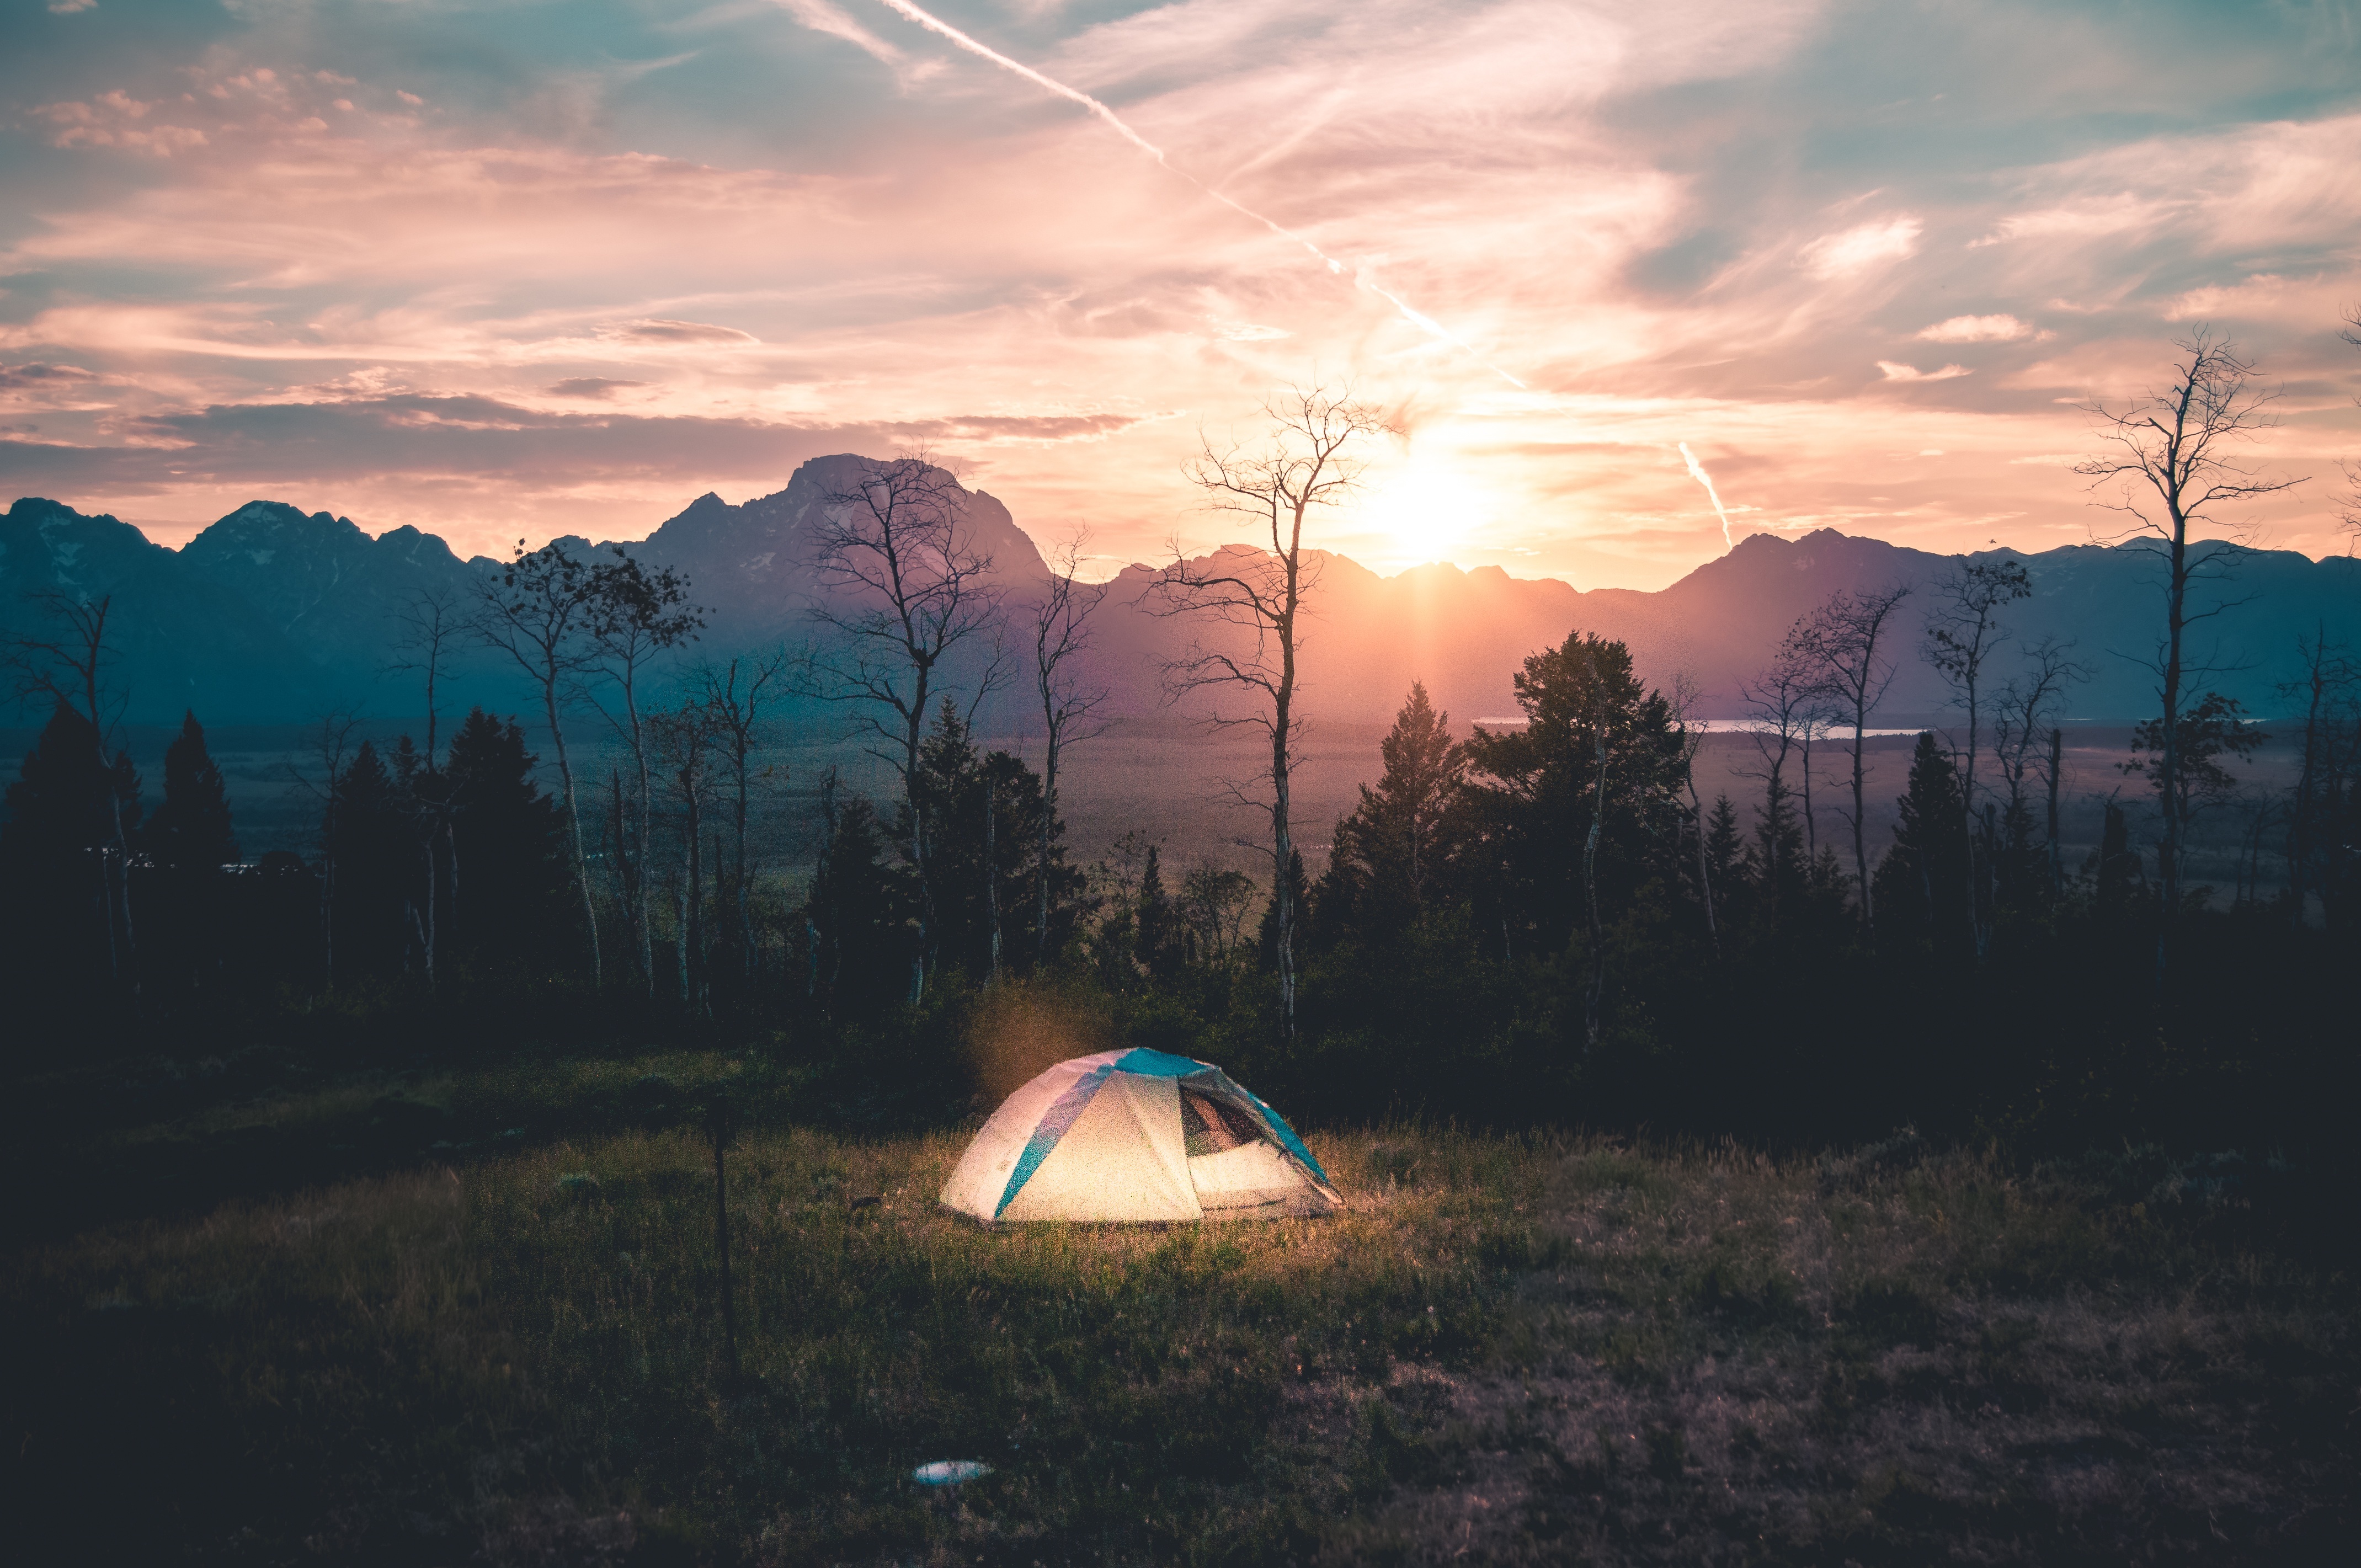 campsite, landscape, nature, tent, camping